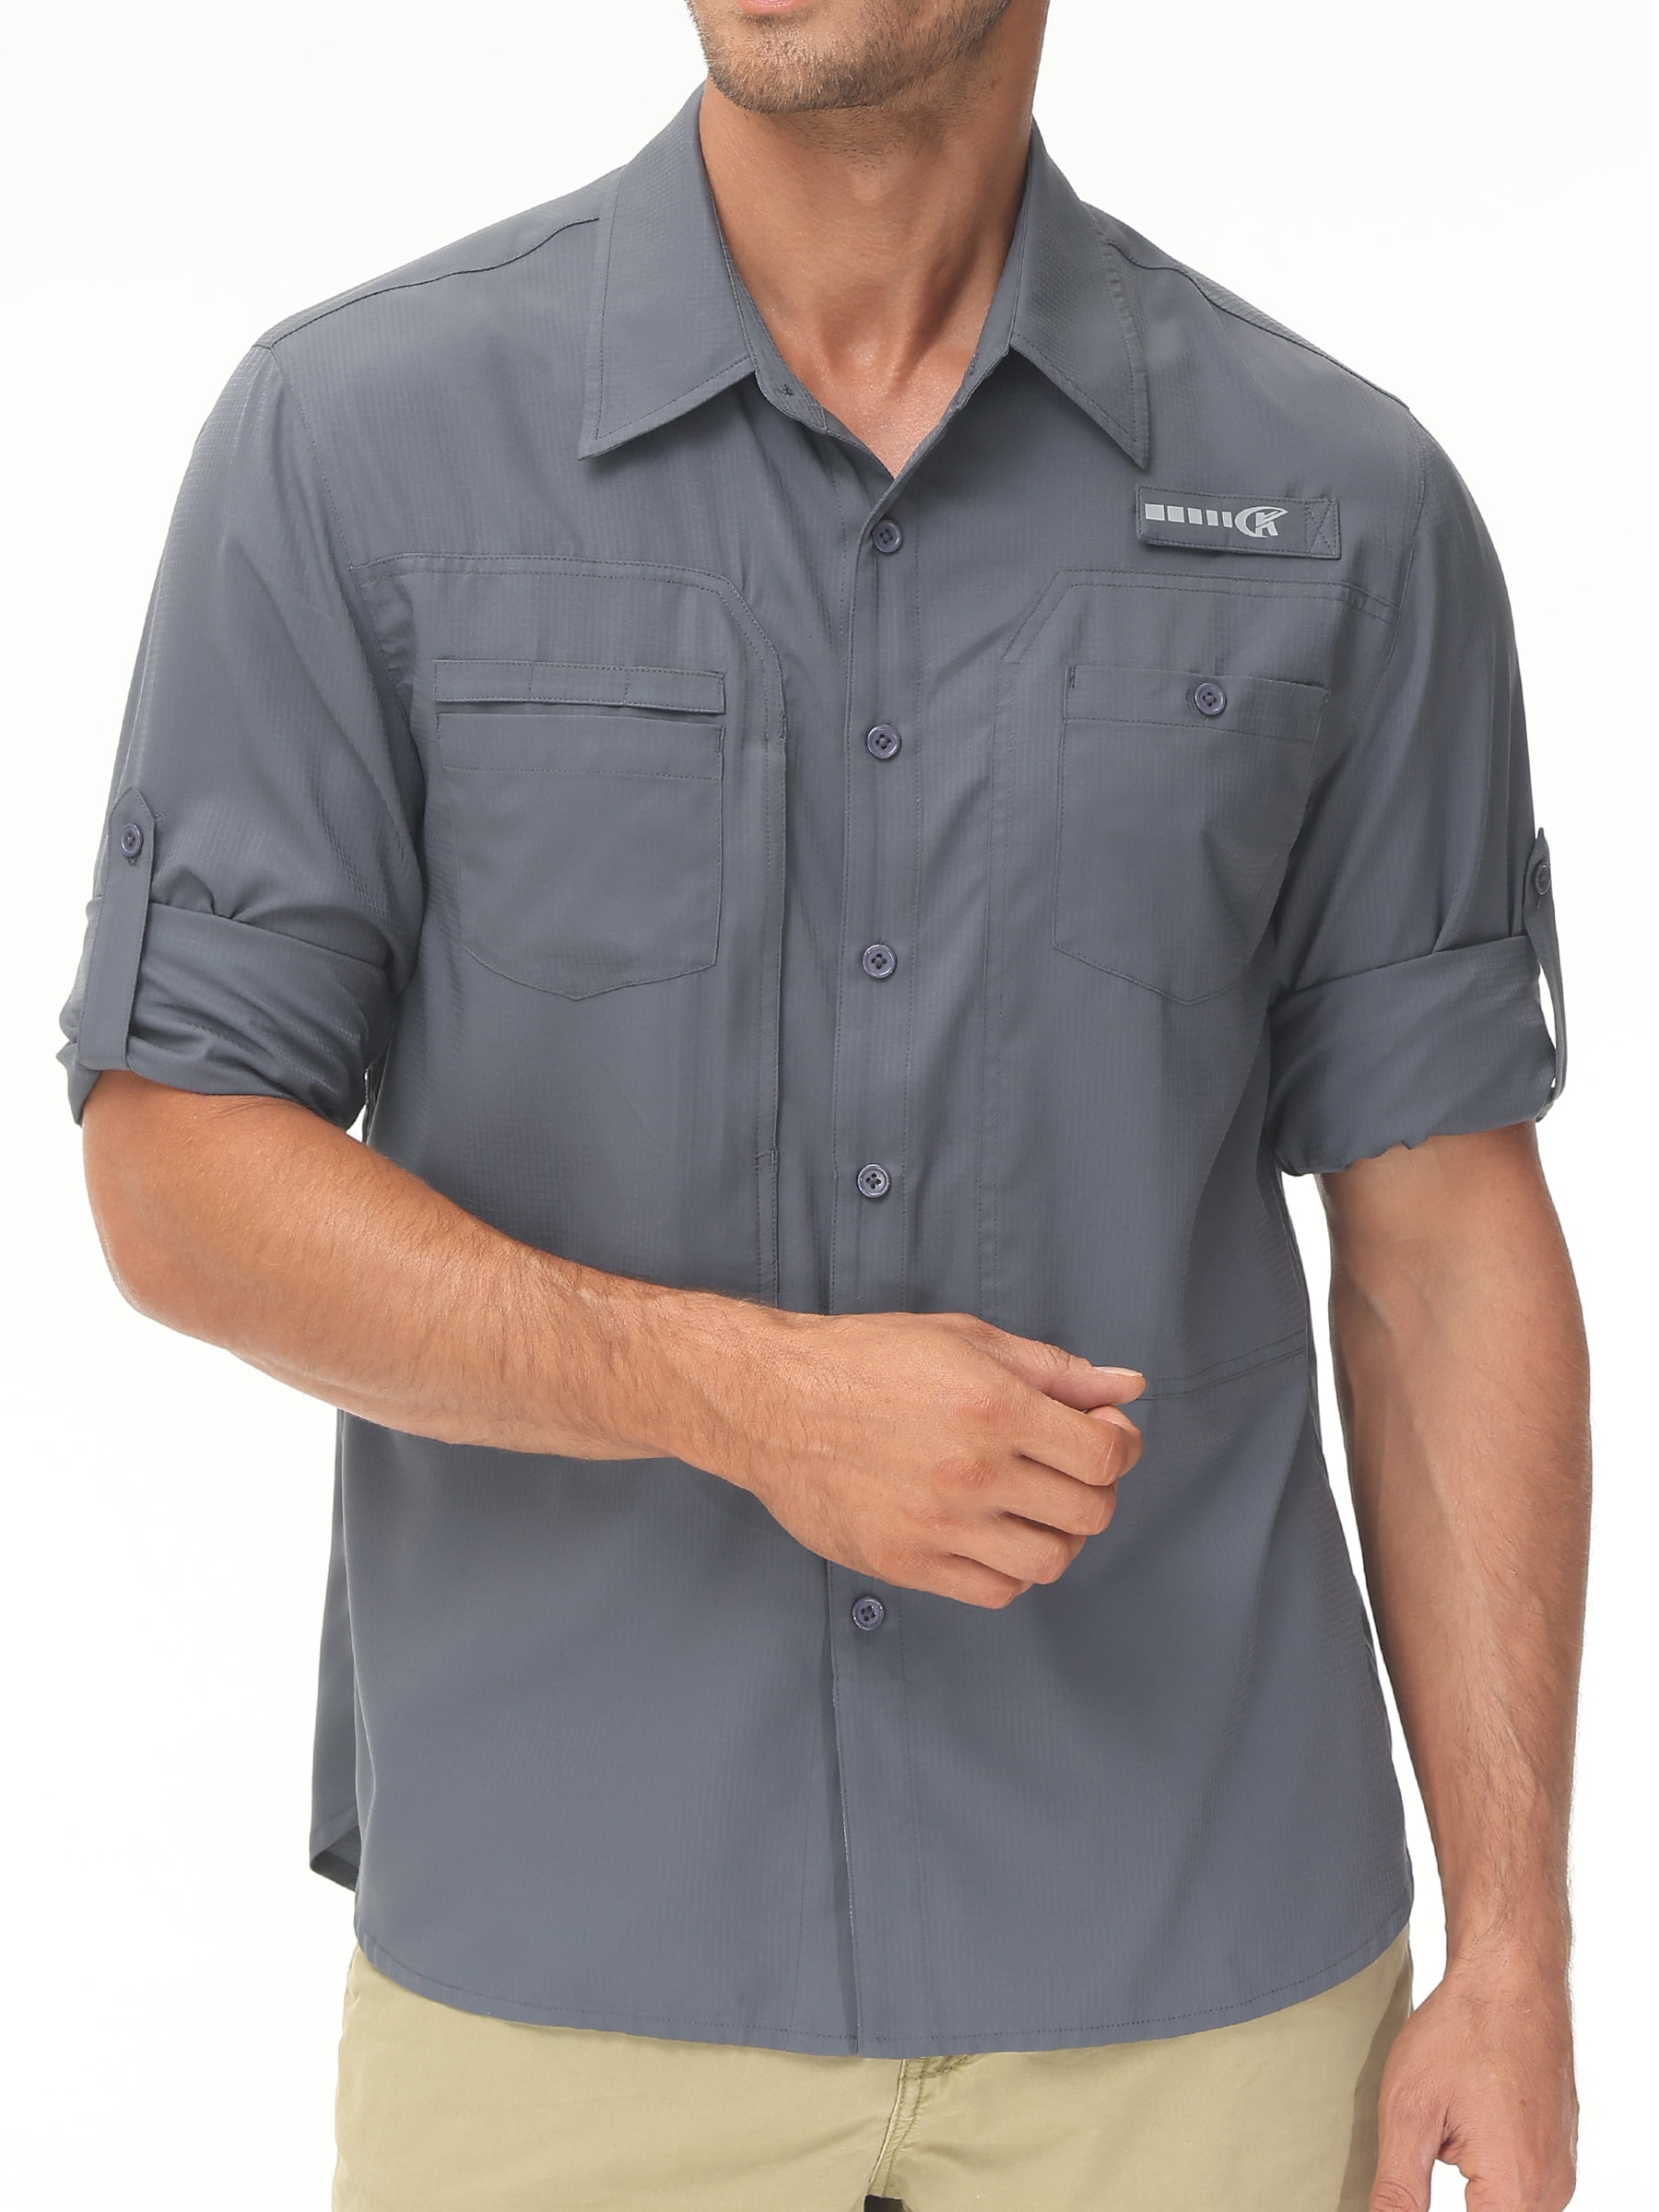 Pdbokew Men's Sun Protection Fishing Shirts Long Sleeve Travel Work Shirts  for Men UPF50+ Button Down Shirts with Zipper Pockets Dark Grey XL 